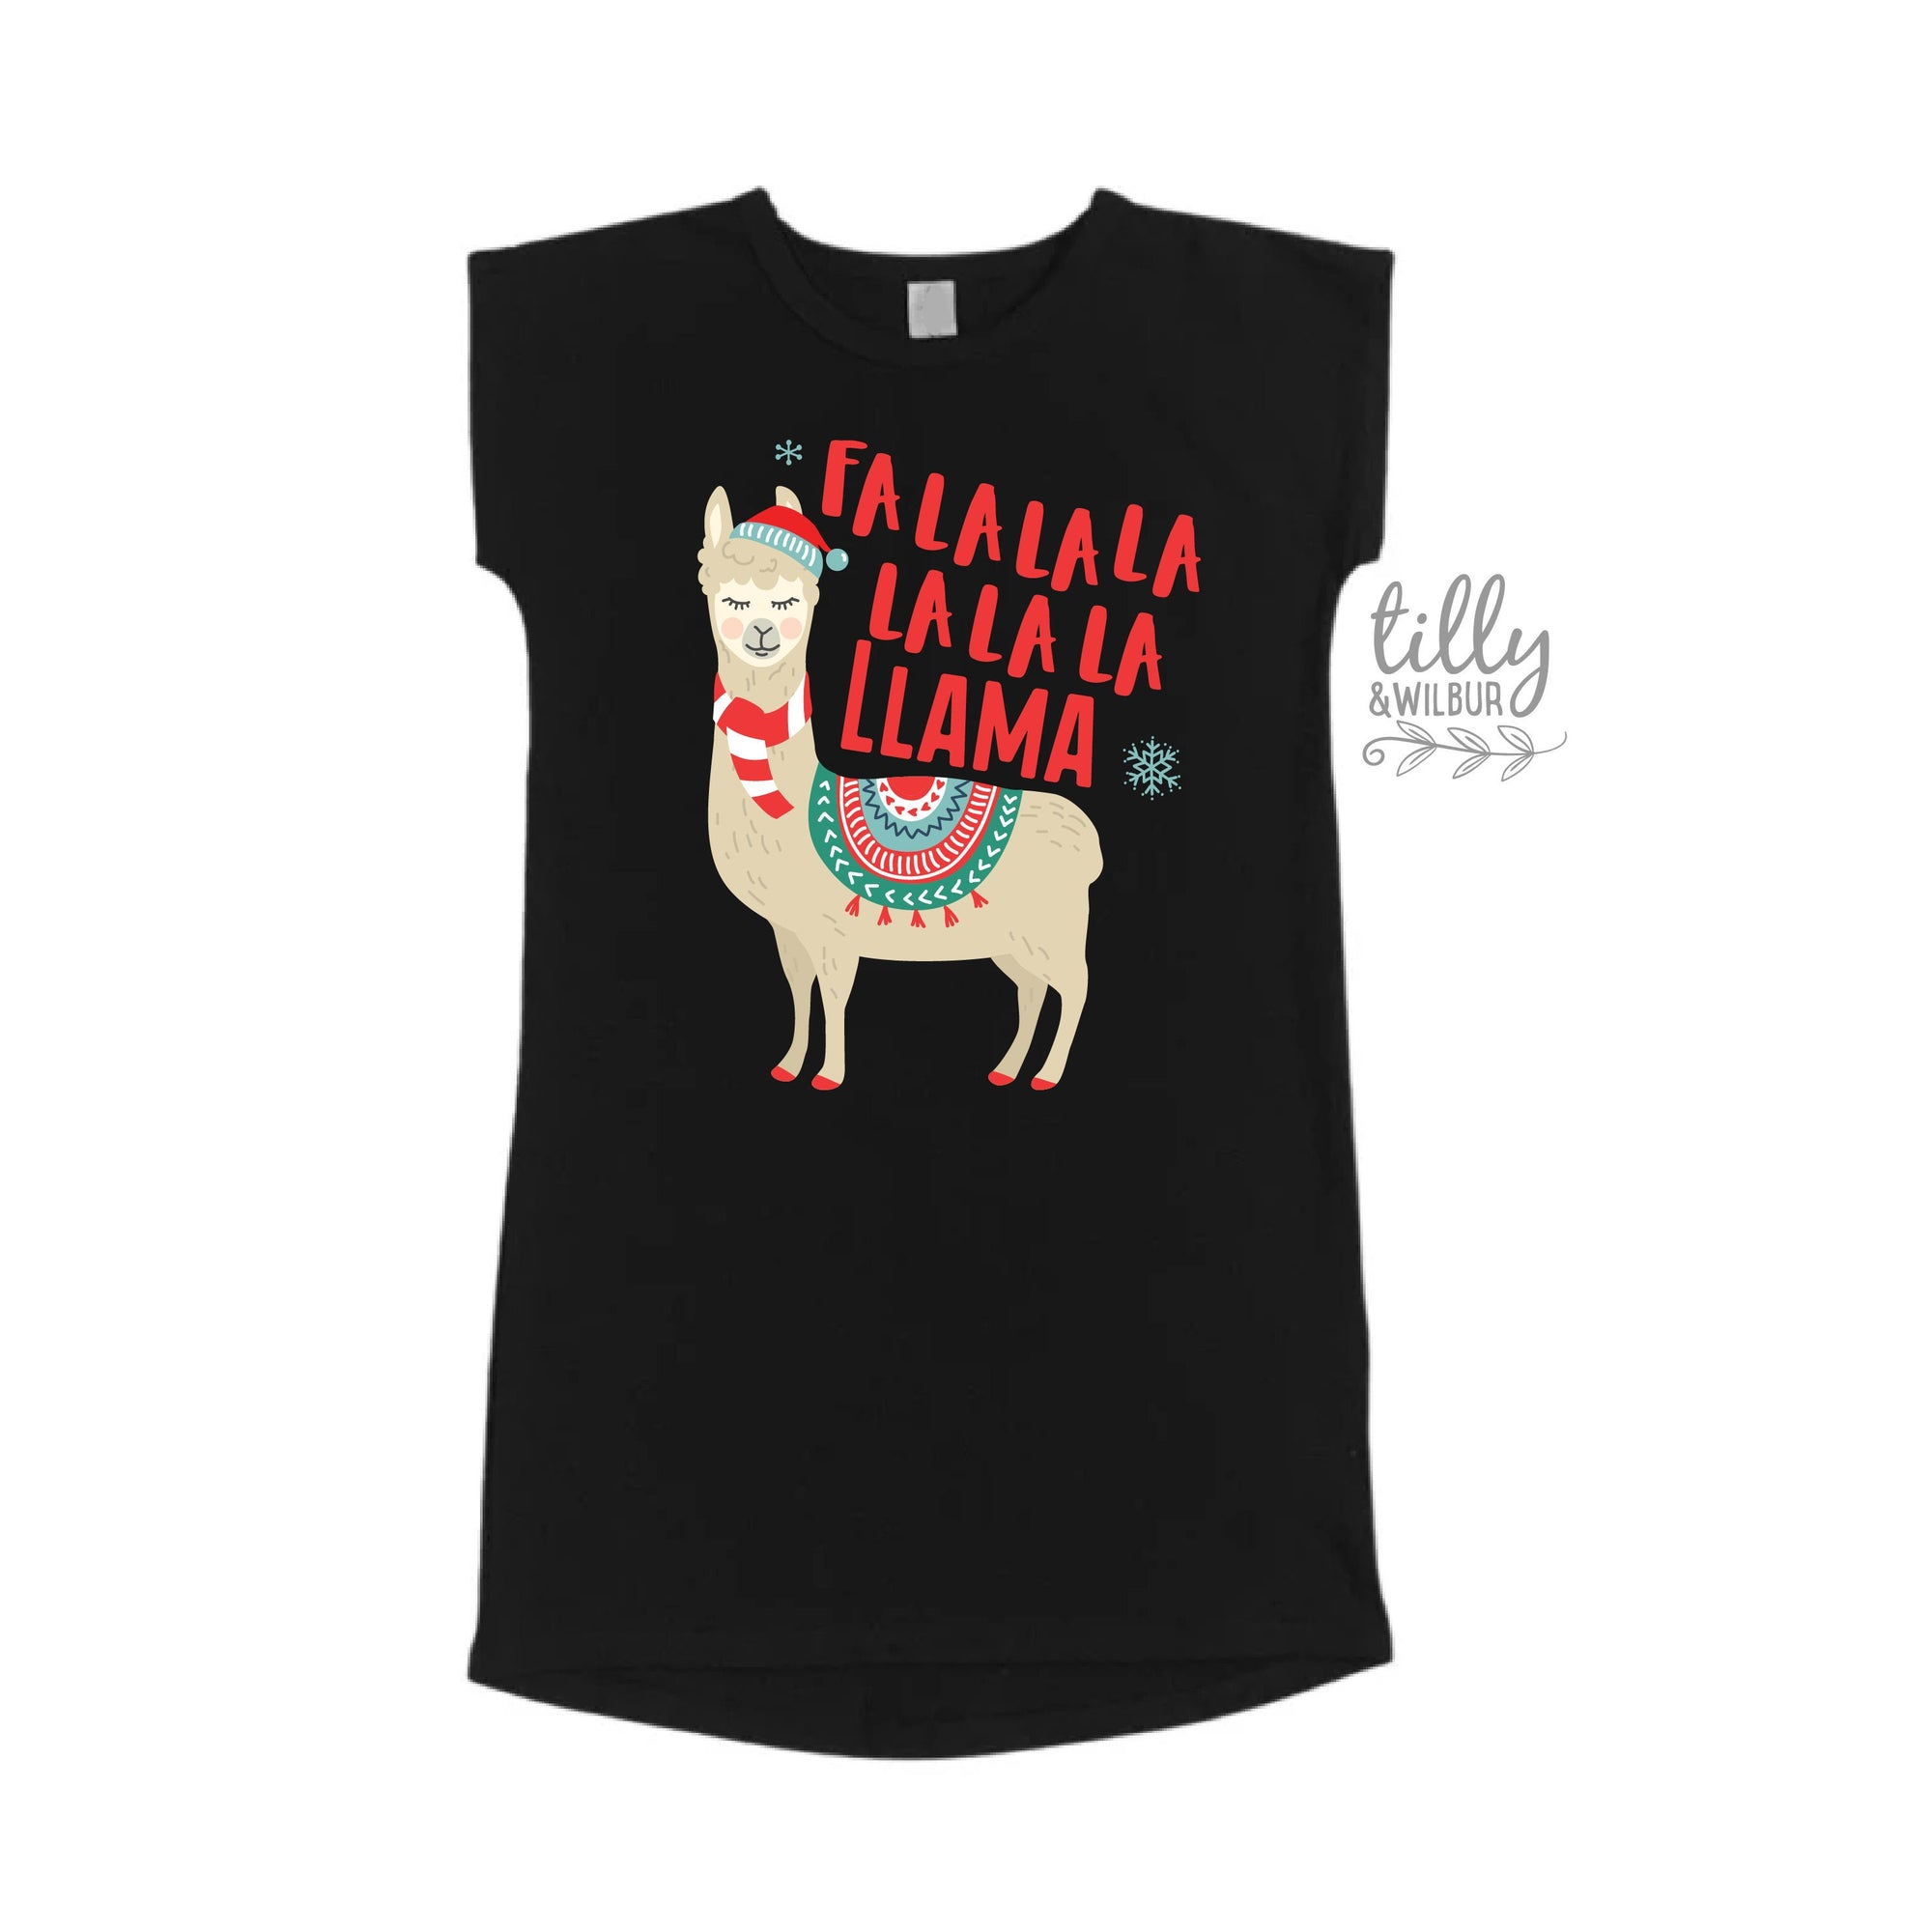 Fa La La La La La La Llama T-Shirt Dress, Matching Family Christmas T-Shirts, Matching Christmas Shirts, Ugly Sweater Tees, Xmas Pajamas